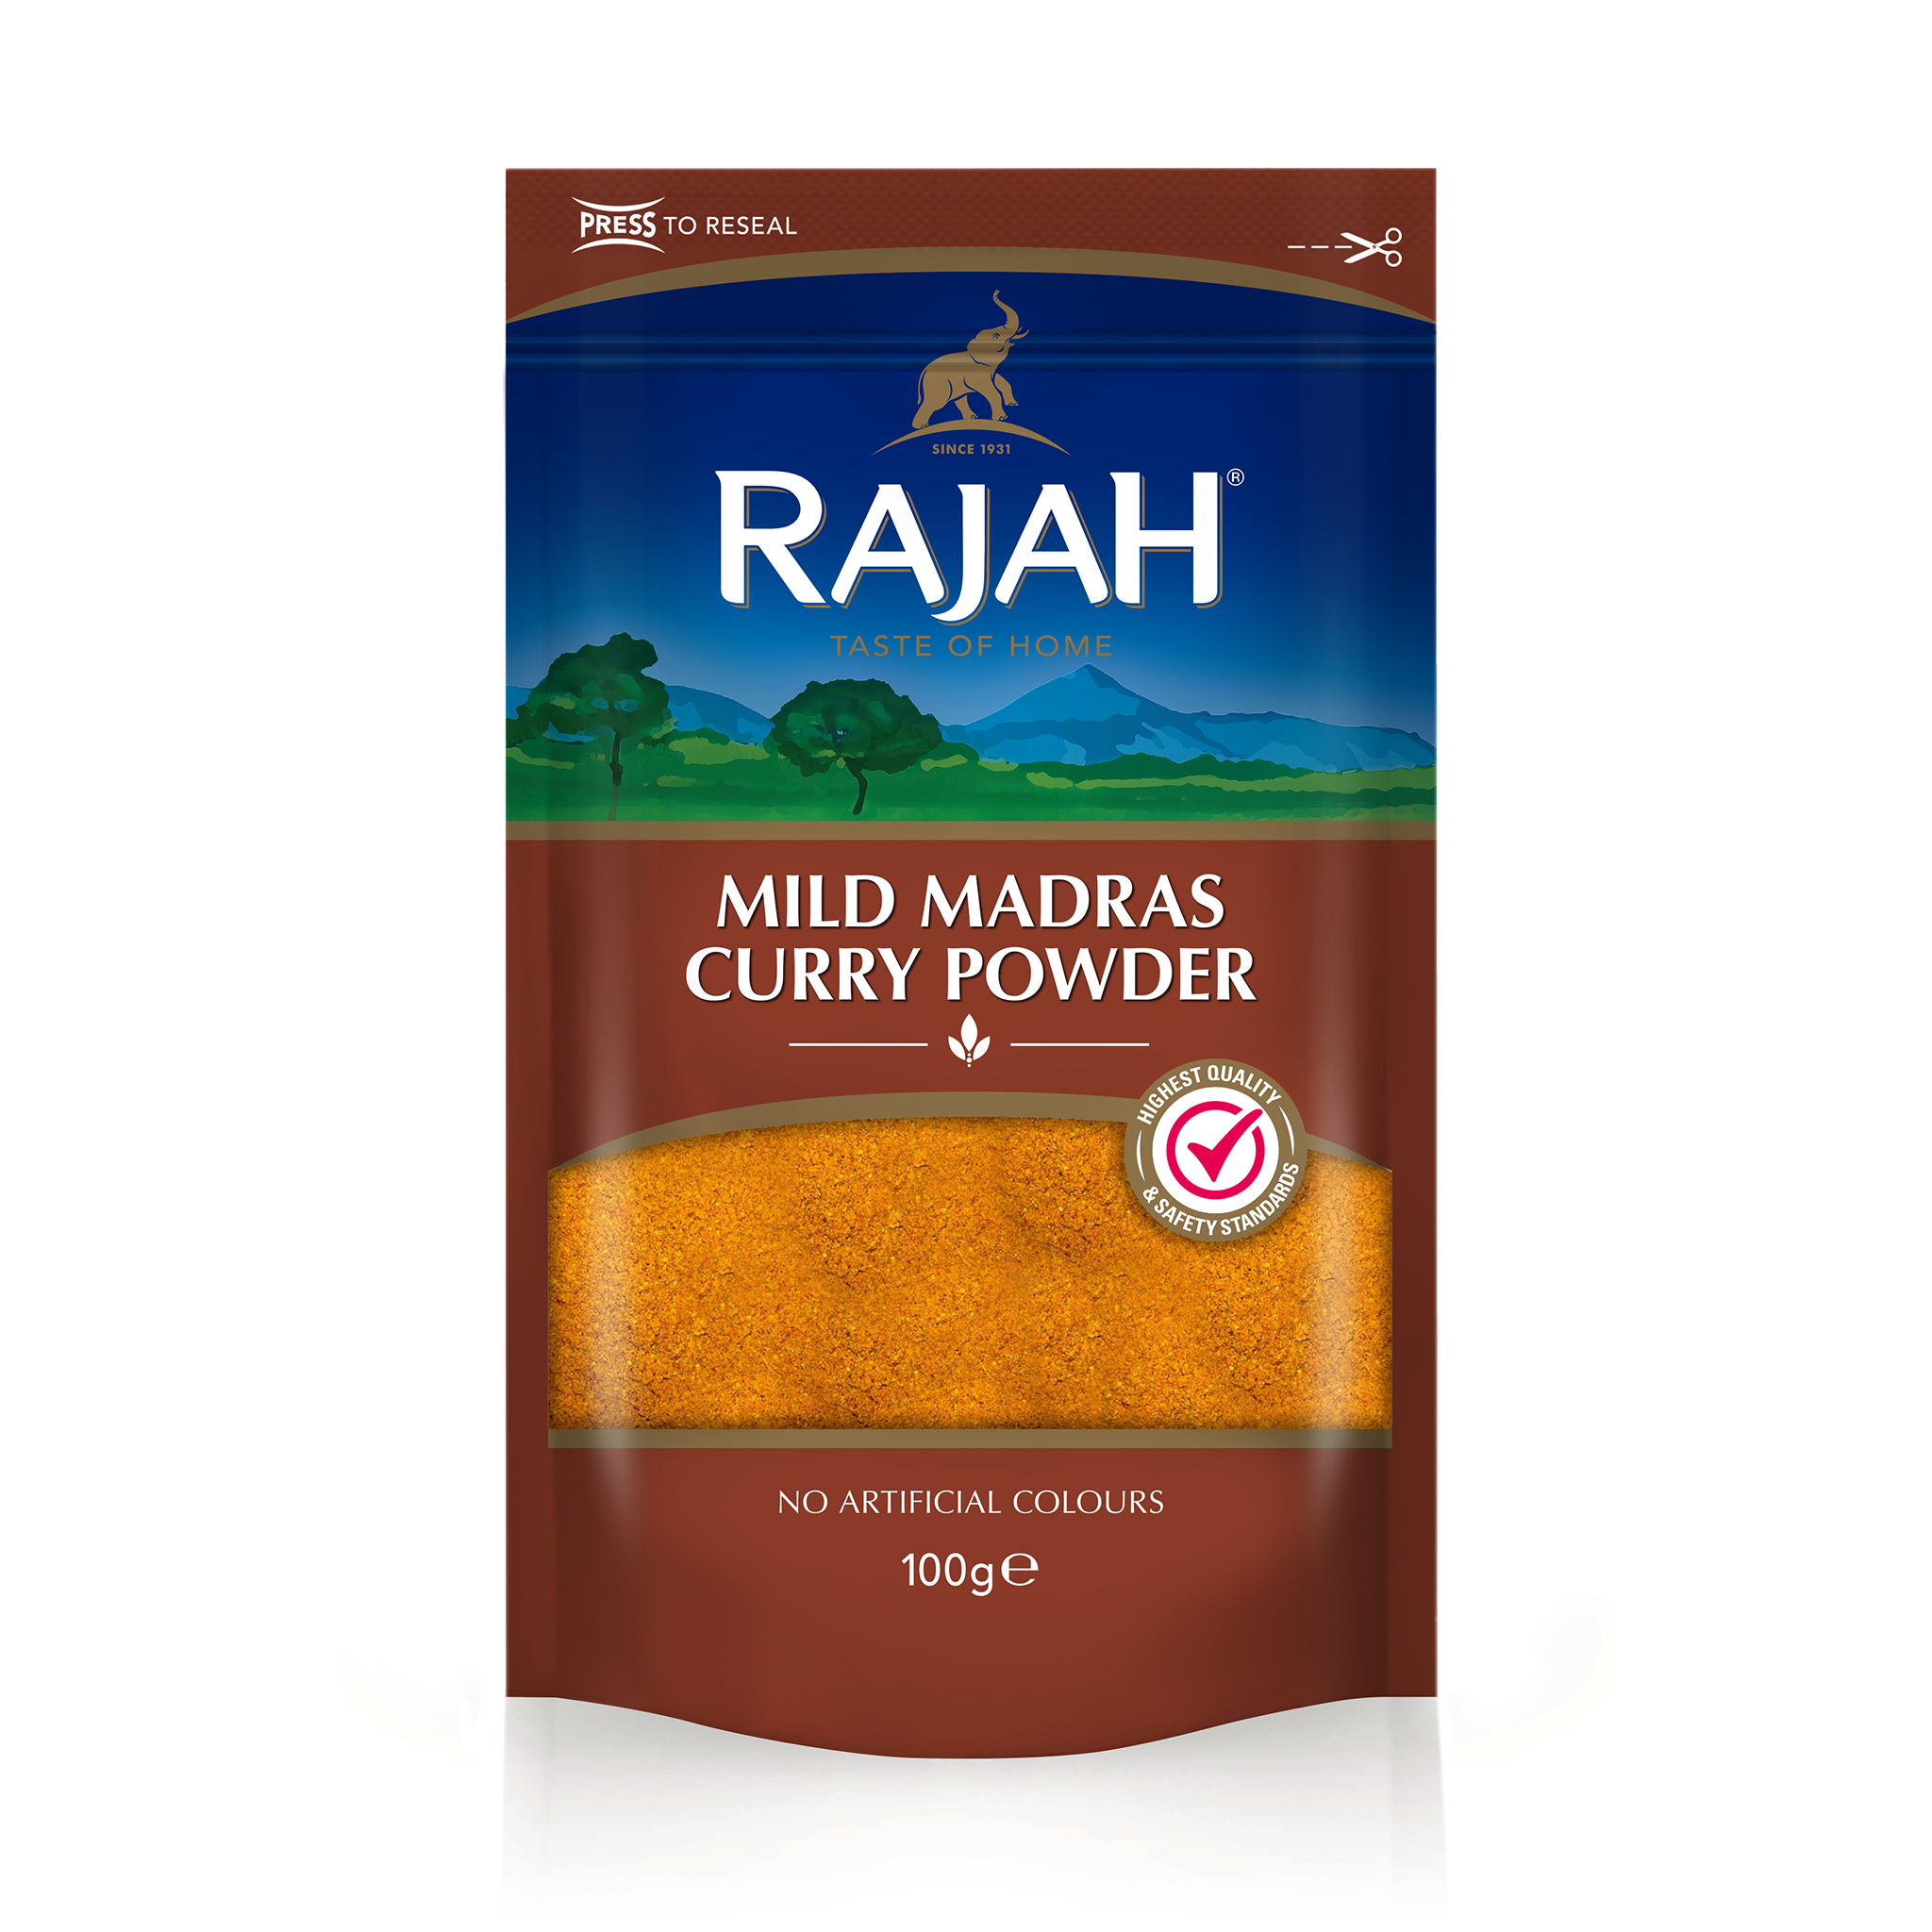 Mild Madras Curry Powder 100g by Rajah